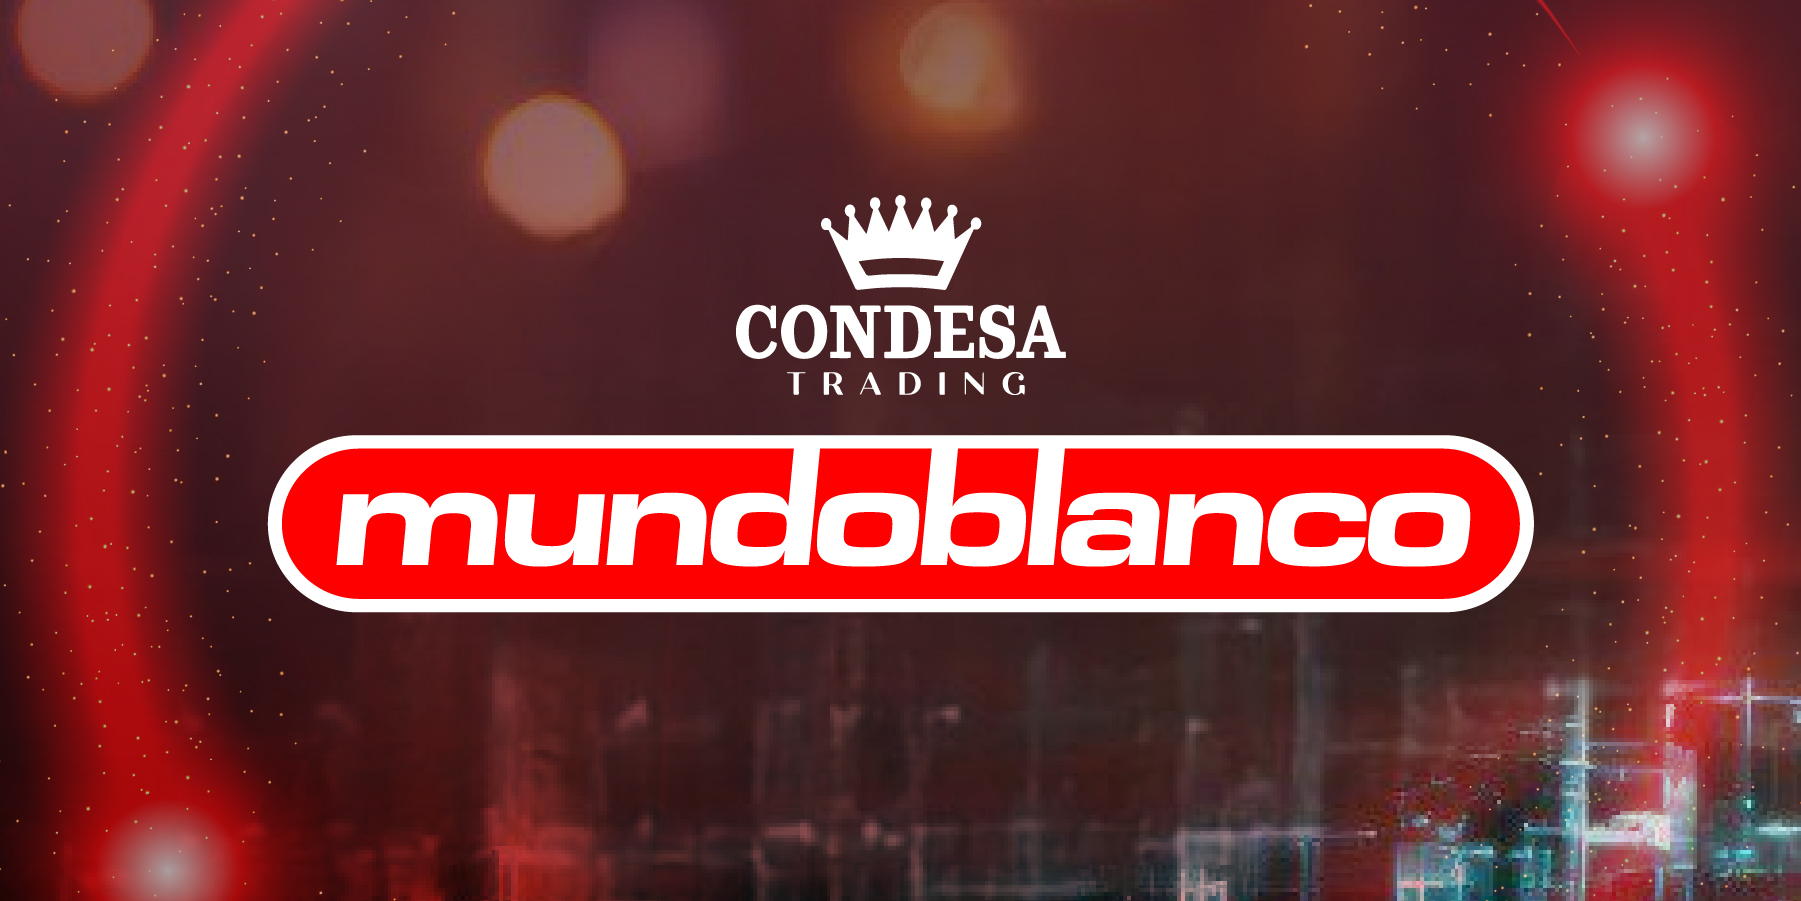 Mundo Blanco品牌加入康德萨贸易公司